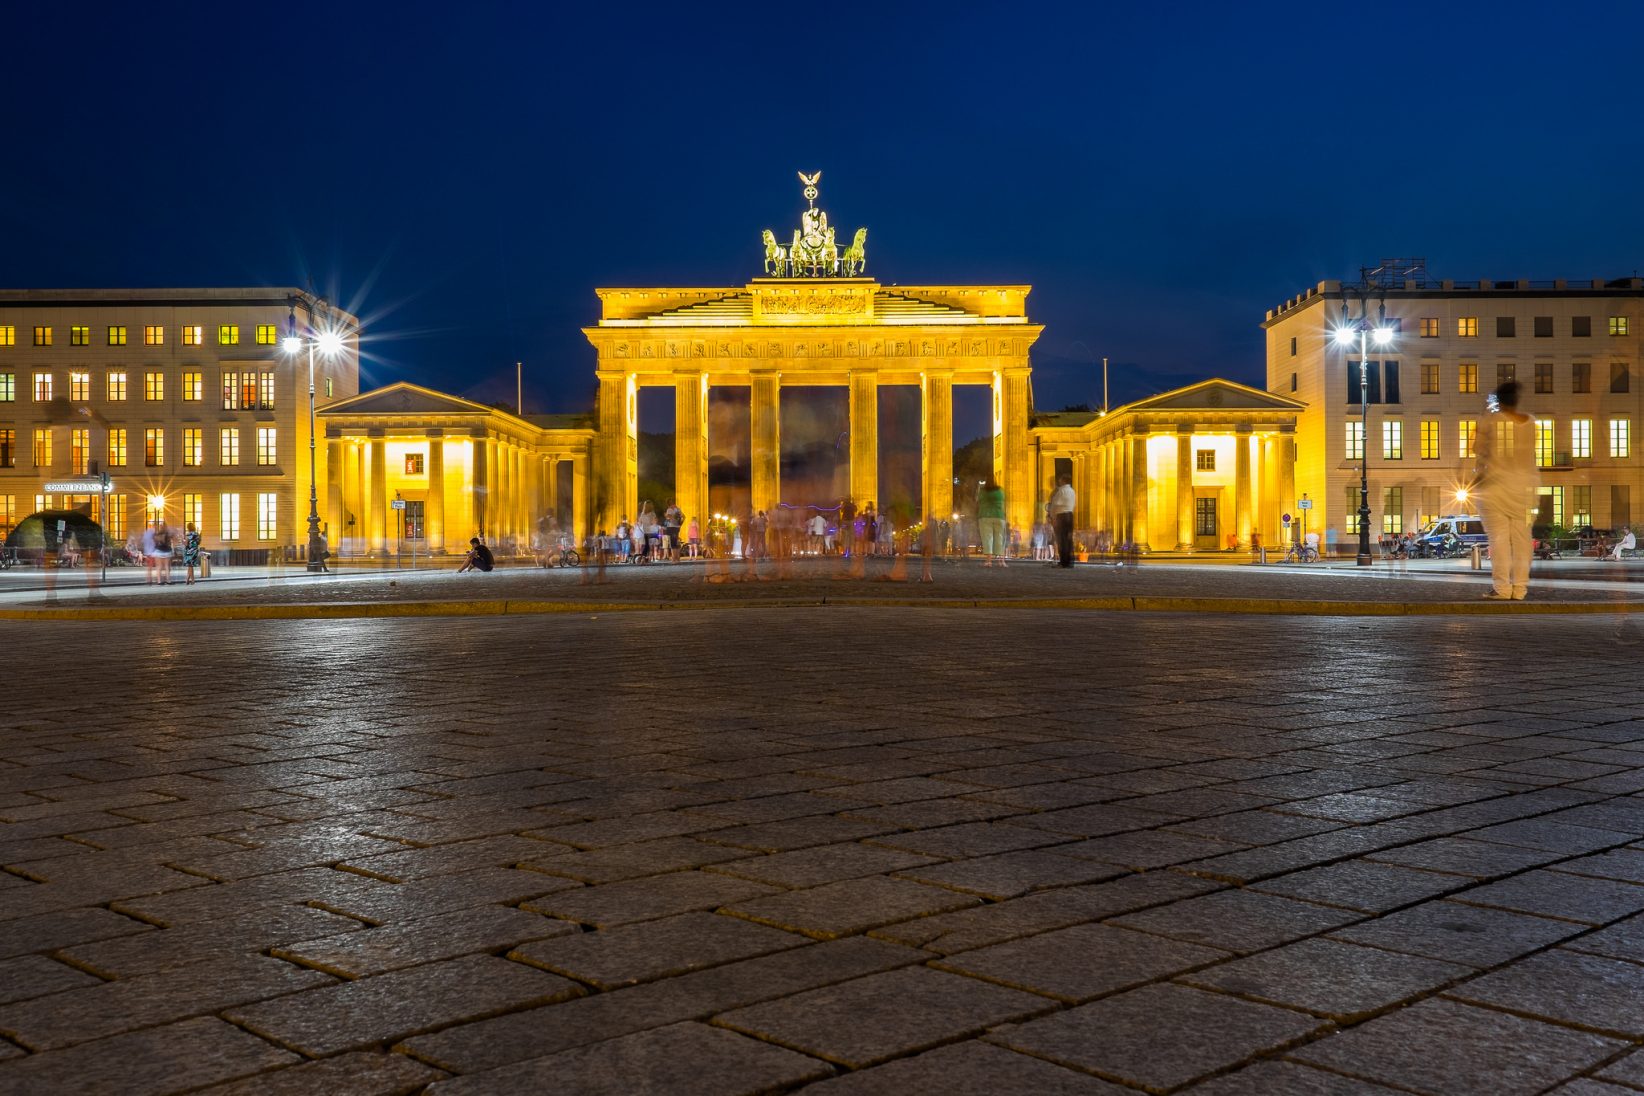 The Brandenburg Gate, Berlin. Photo Source: Davis Staedtler (Flickr). Creative Commons.